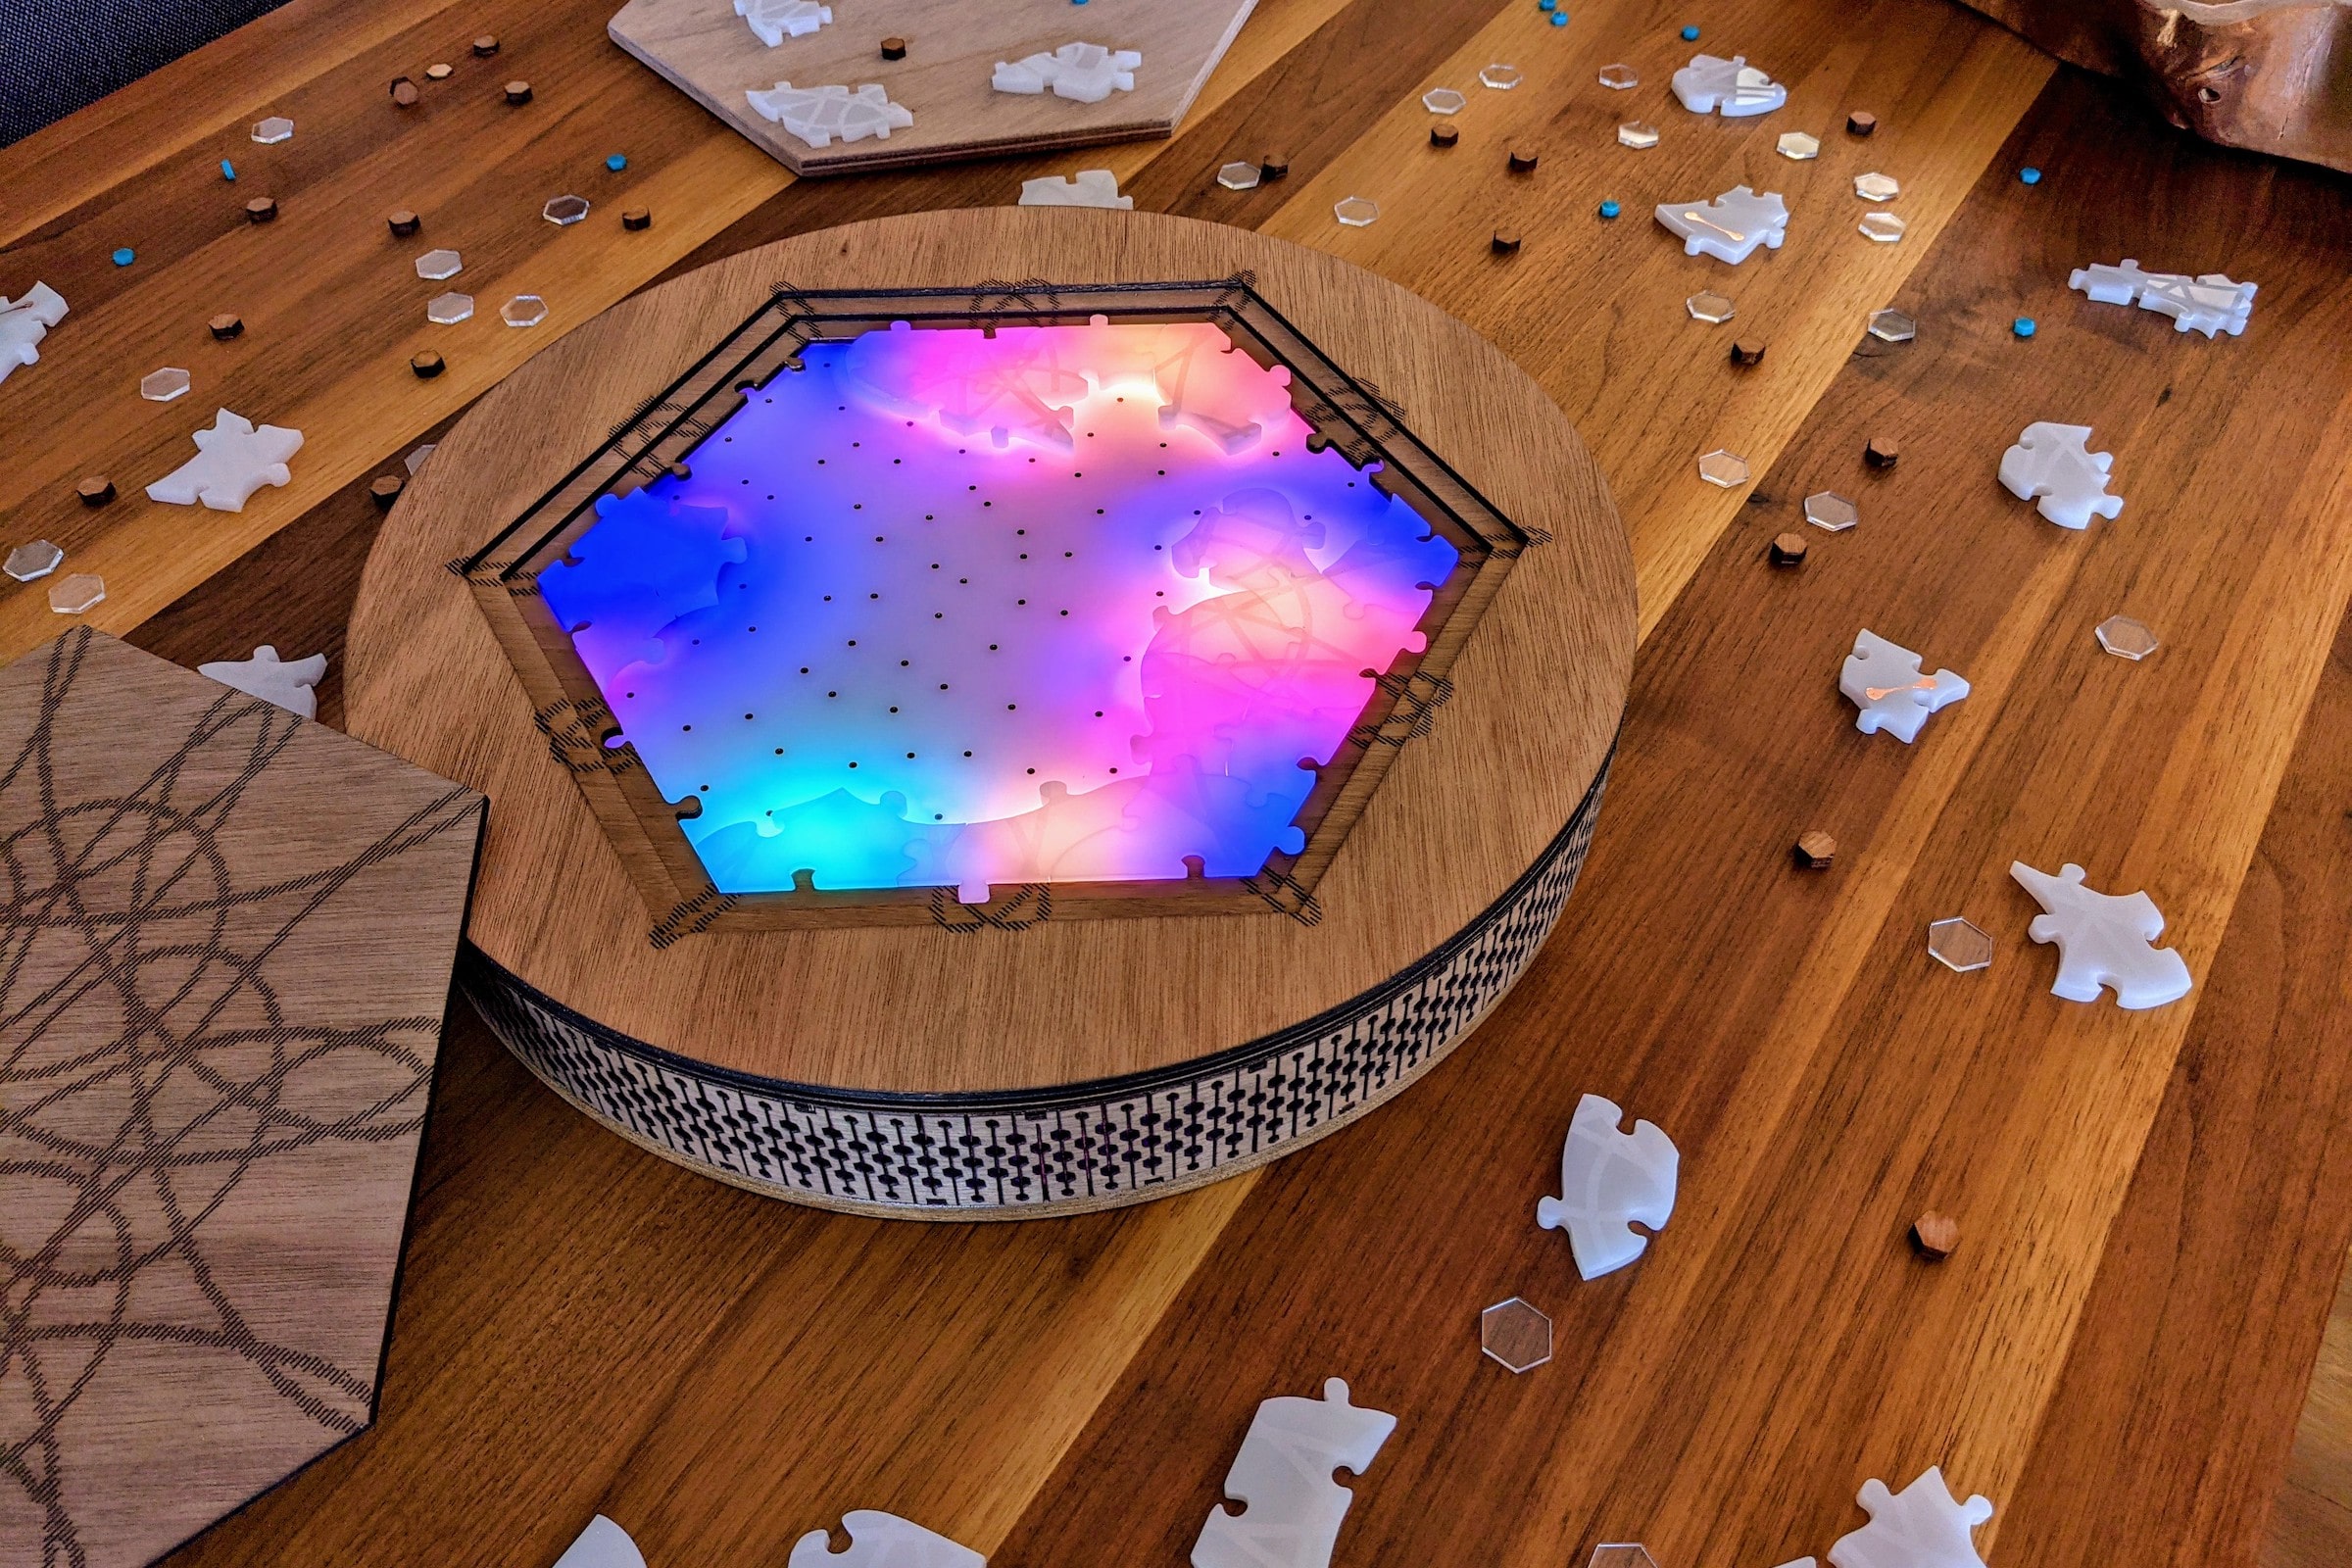 My final project, NOVA, a jigsaw puzzle with light